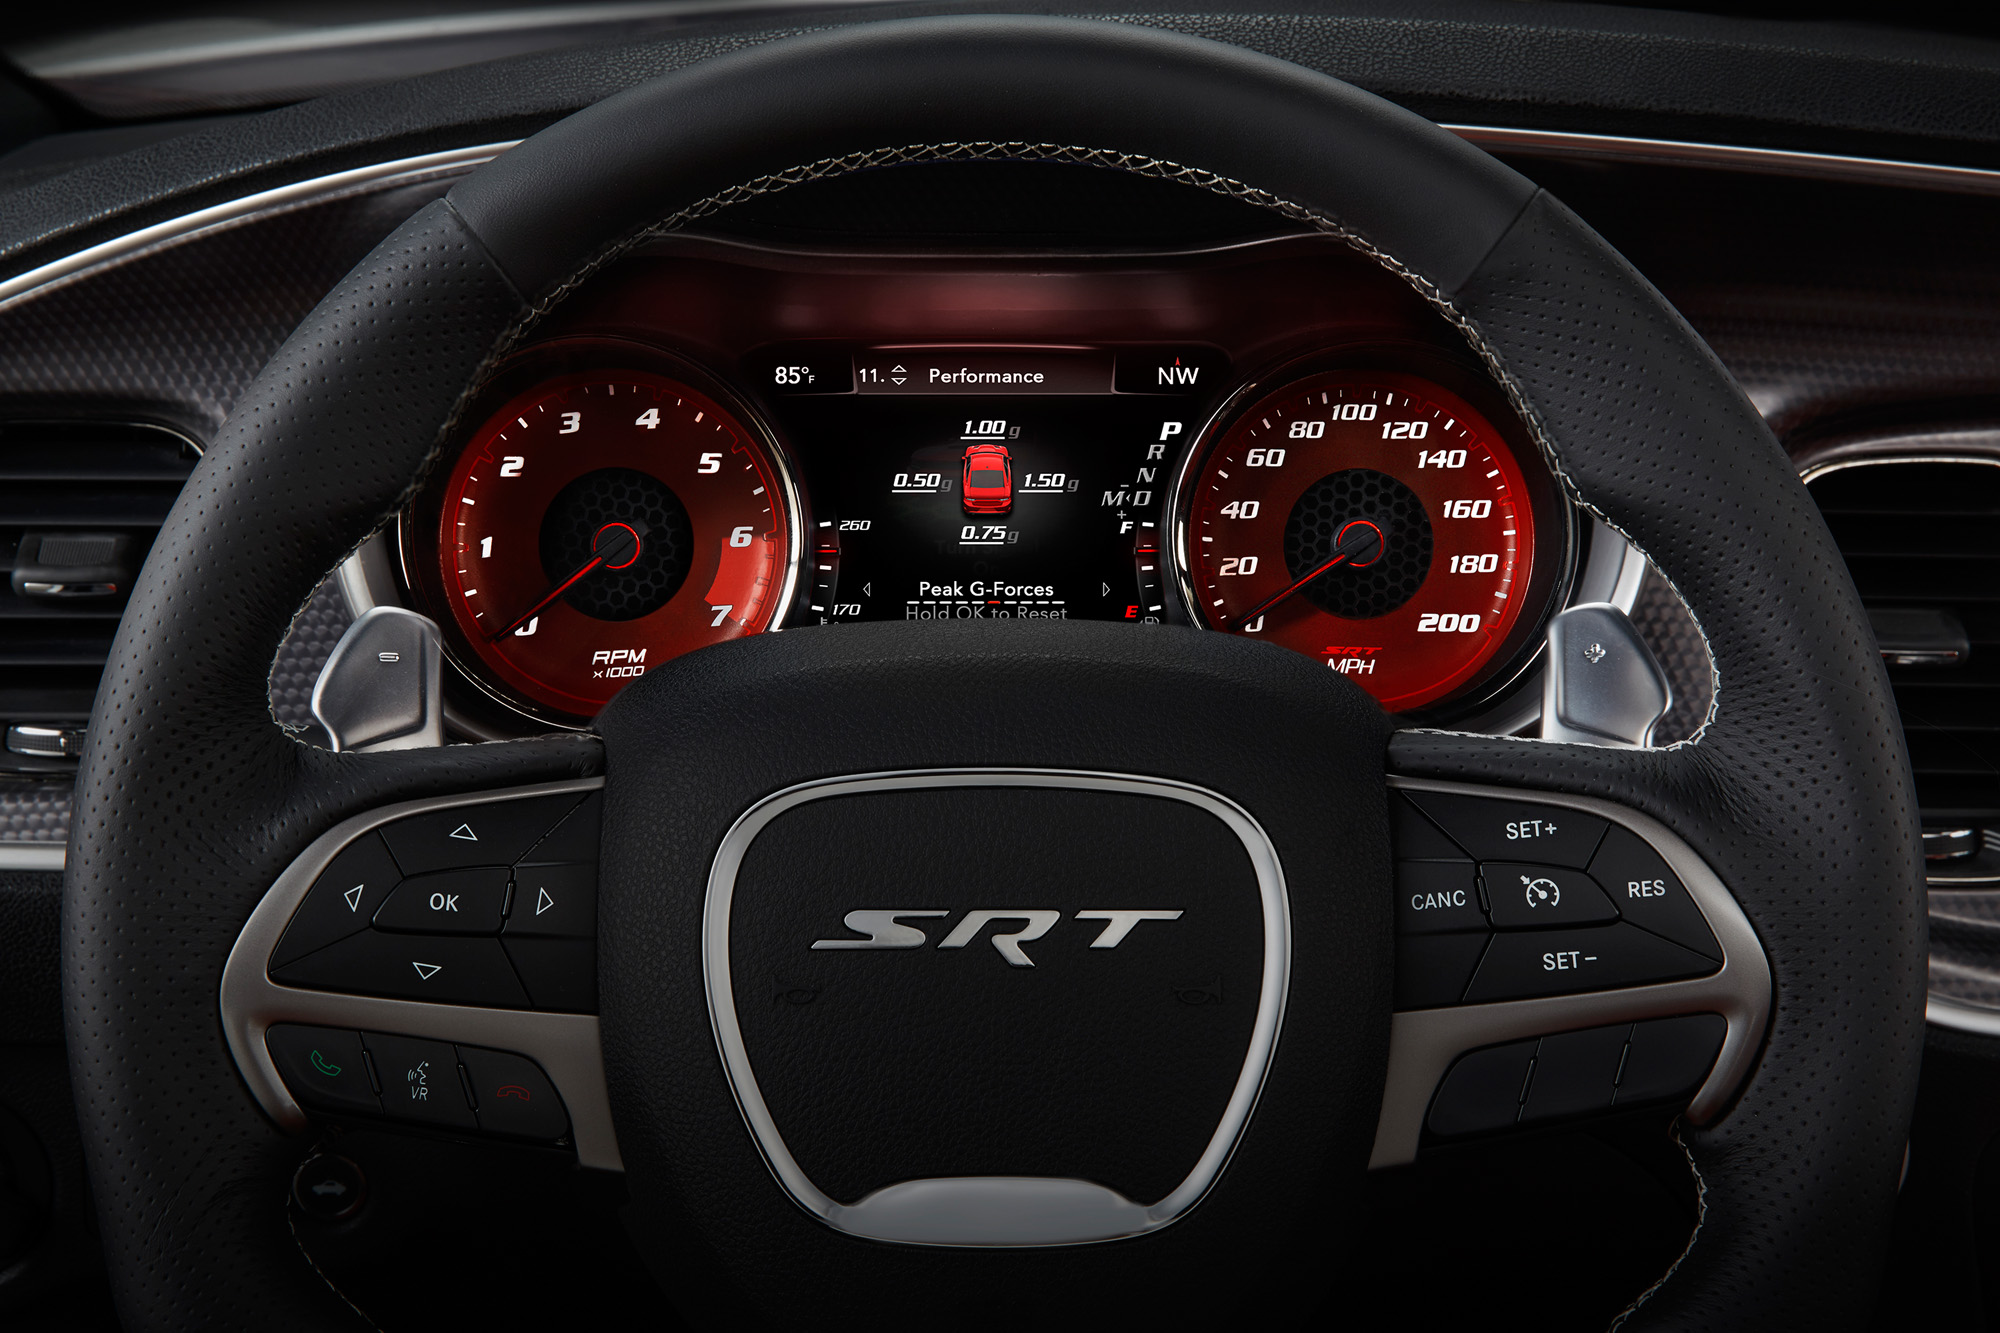 2015 Dodge Charger SRT - Peak G-force screen